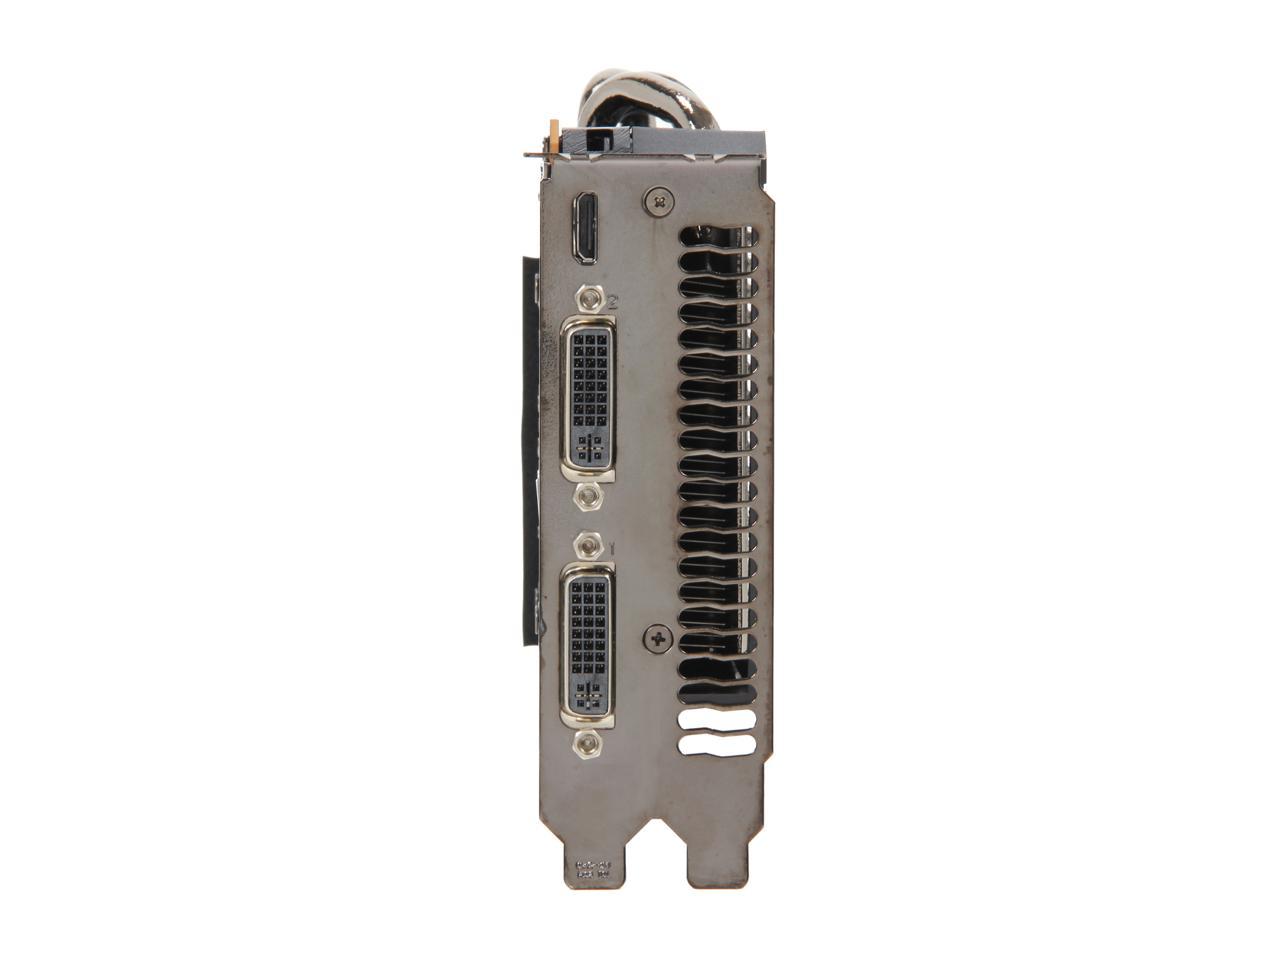 EVGA GeForce GTX 480 (Fermi) DirectX 11 015-P3-1480-KR 1536MB 384-Bit GDDR5 PCI Express 2.0 x16 HDCP Ready SLI Support Video Card